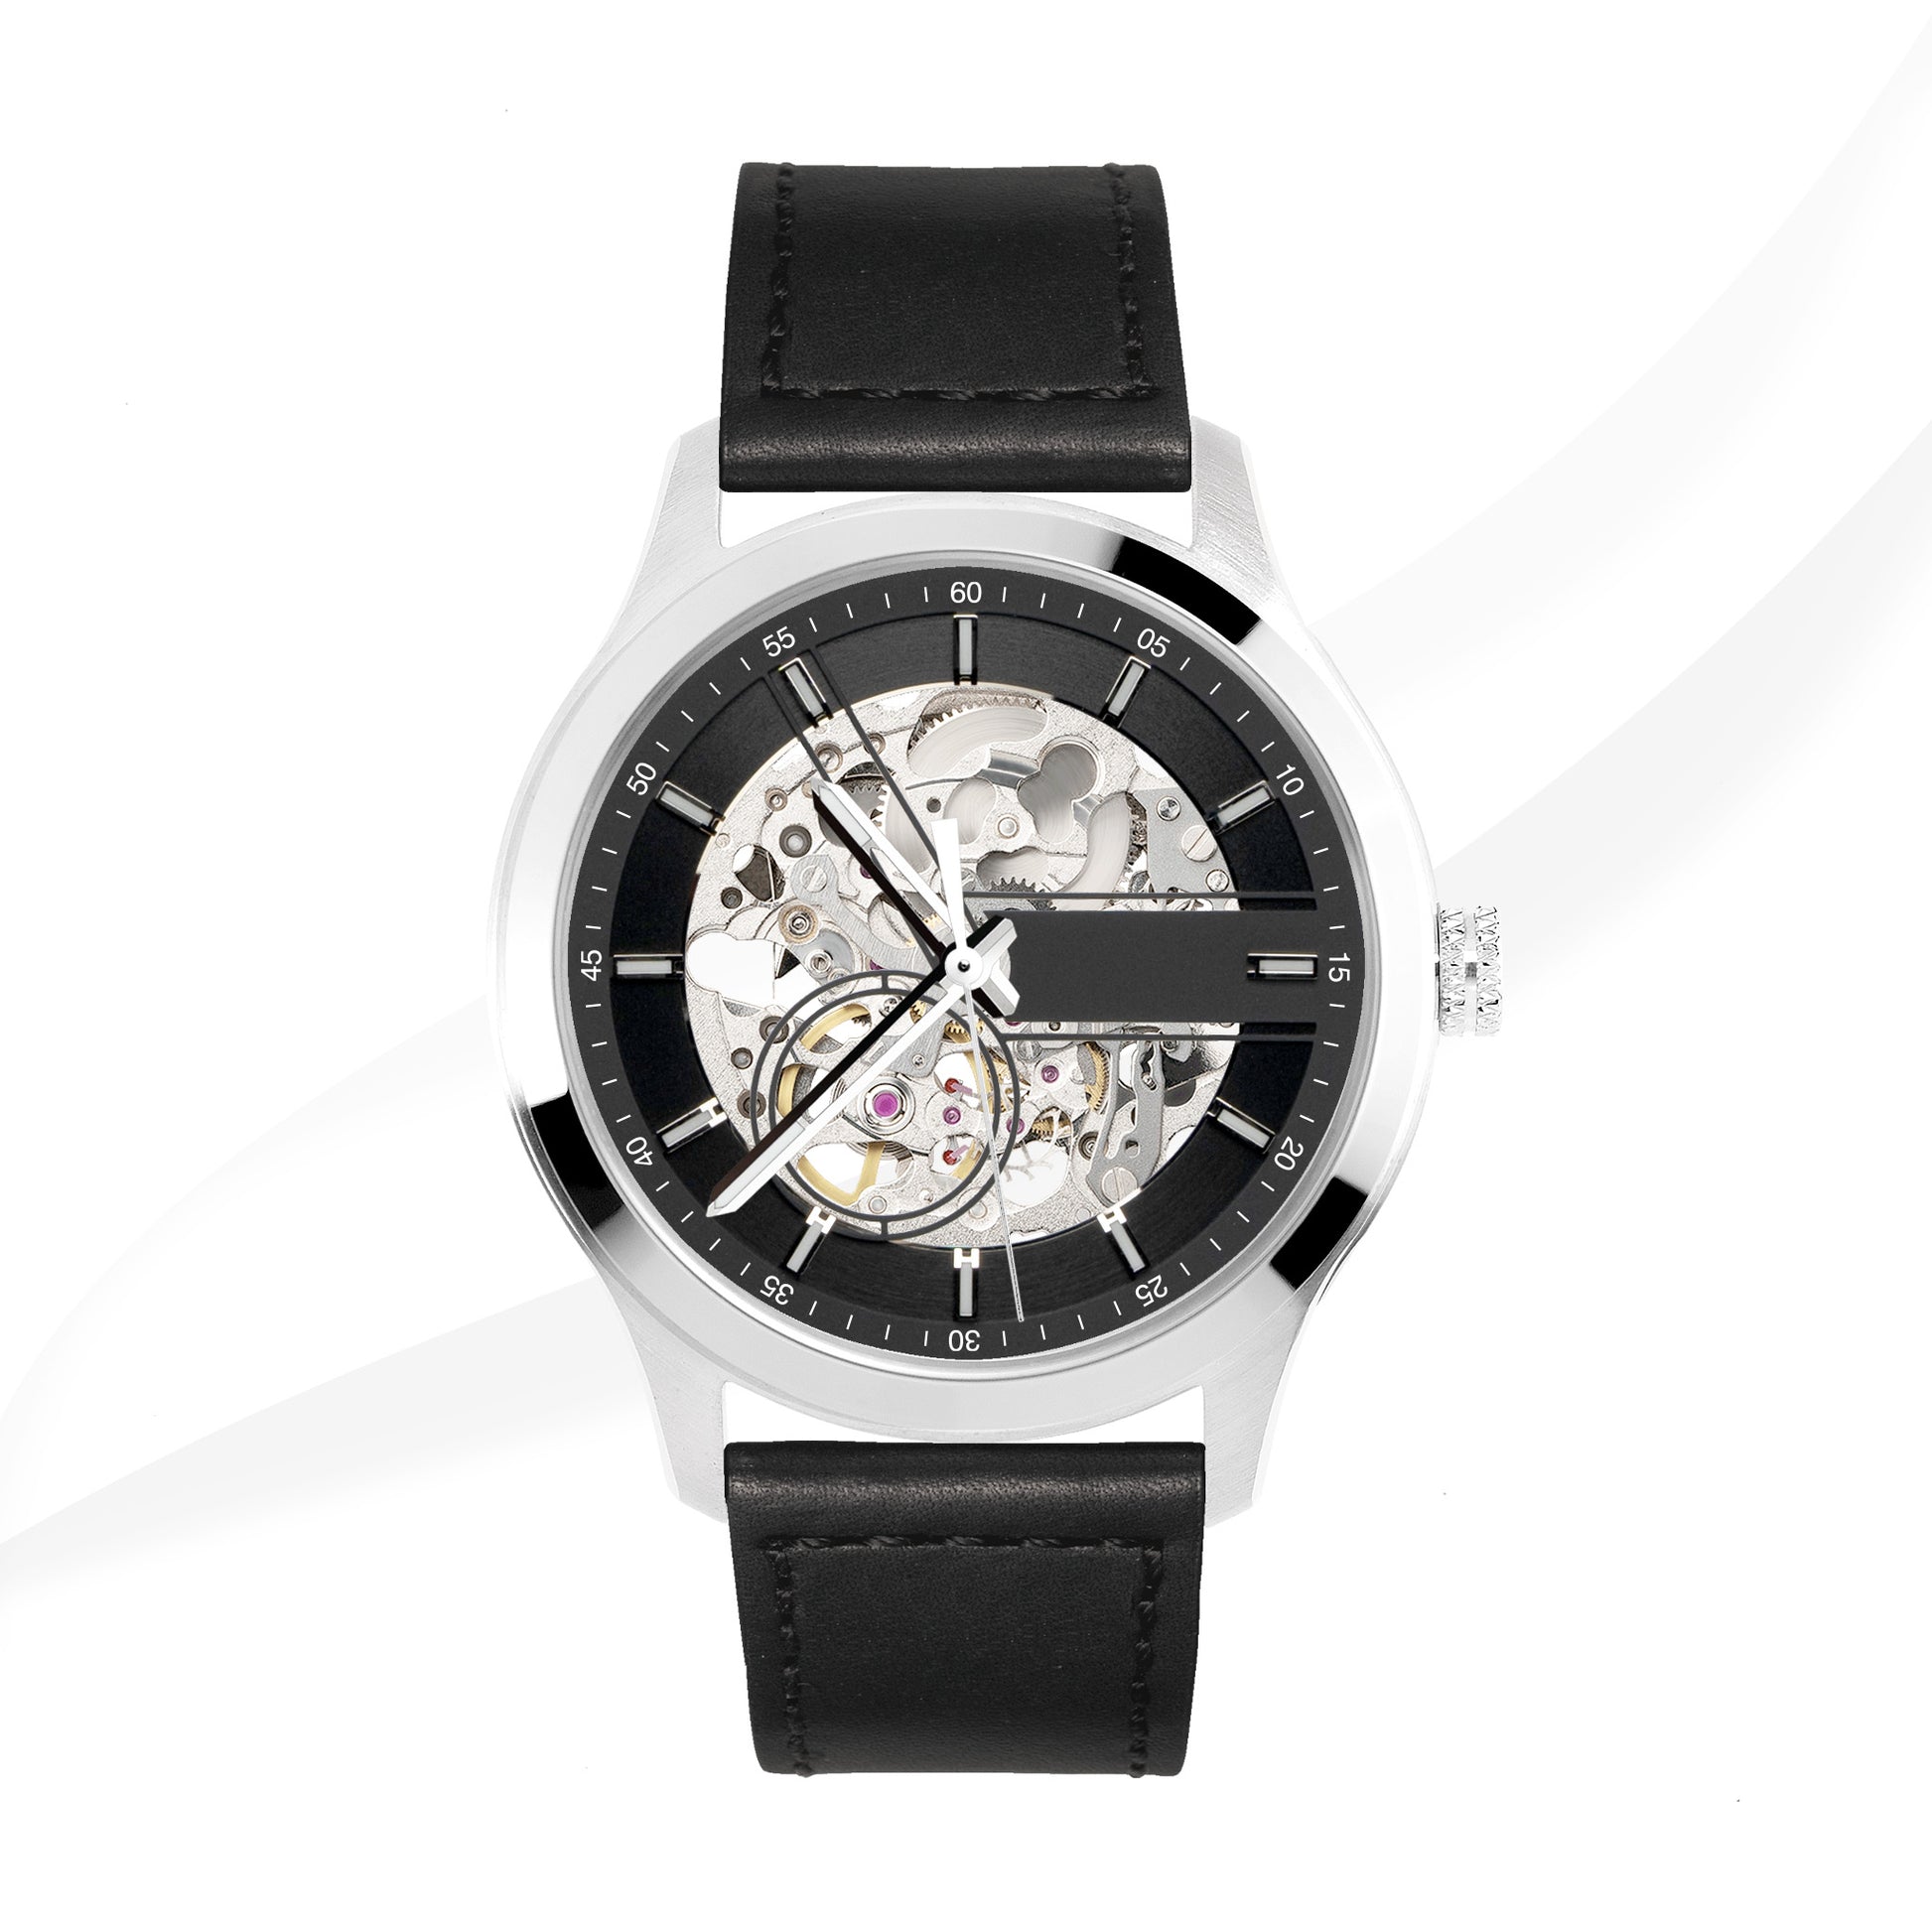 EONIQ - Custom Skeleton watch with black leather strap - Navigator s series